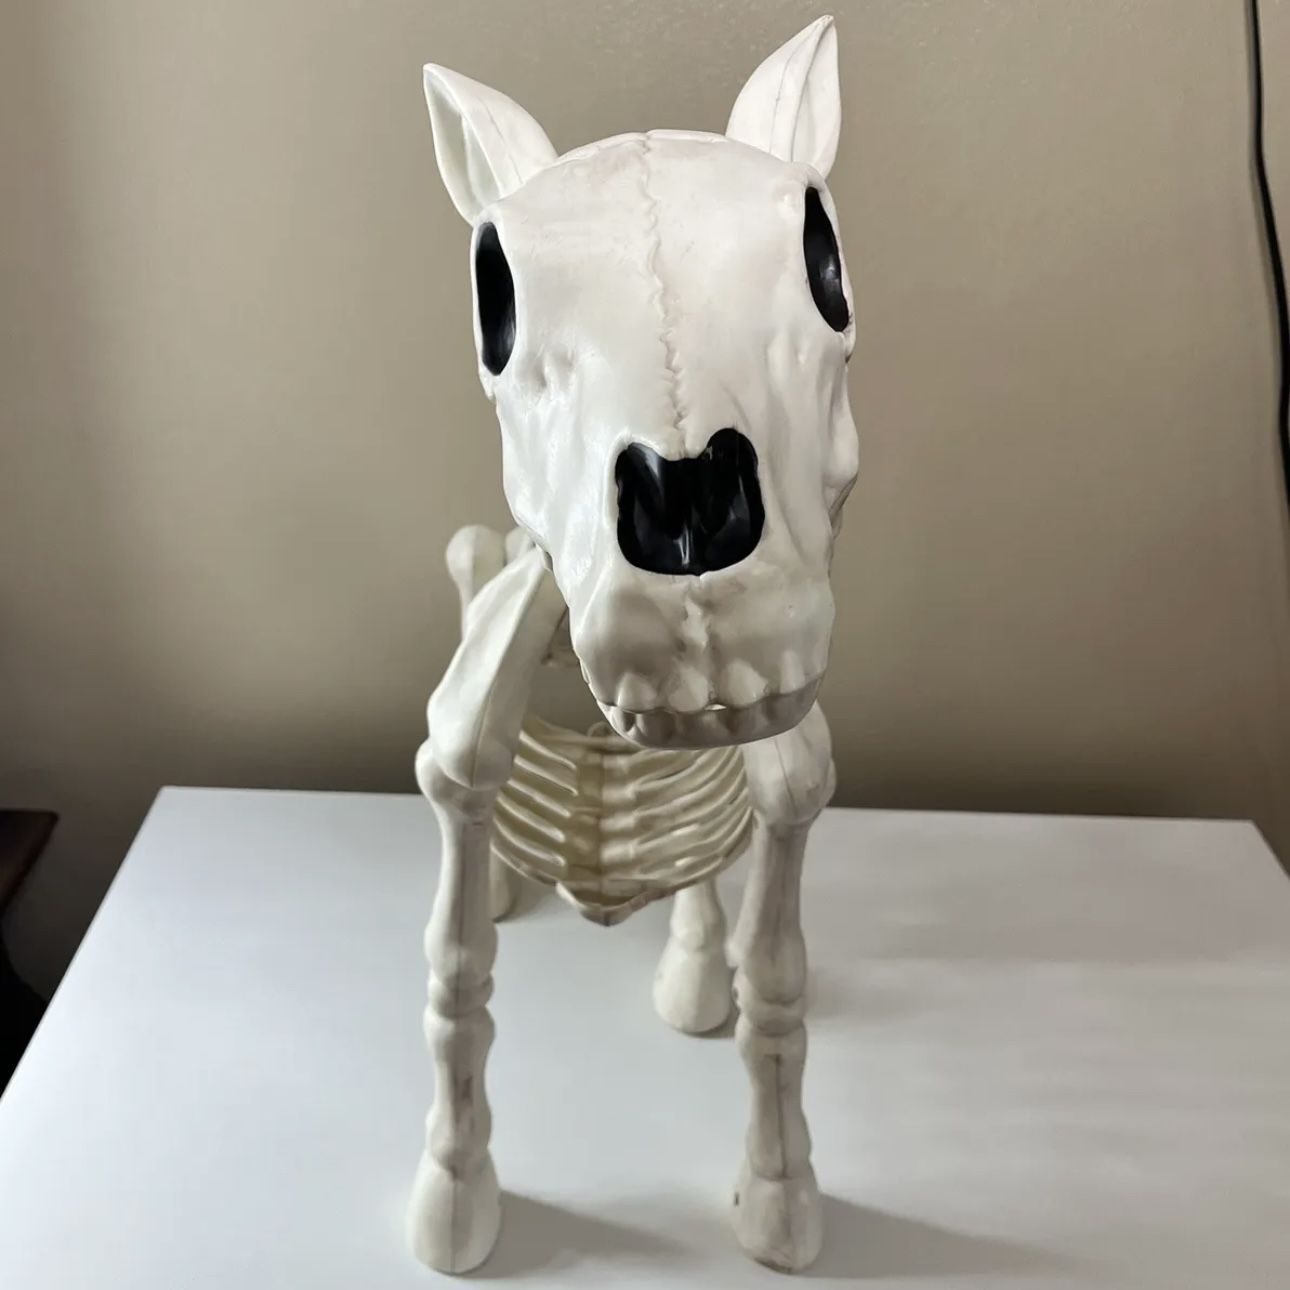 Horse Skeleton Spooky Halloween Decorative Prop Festive Decoration